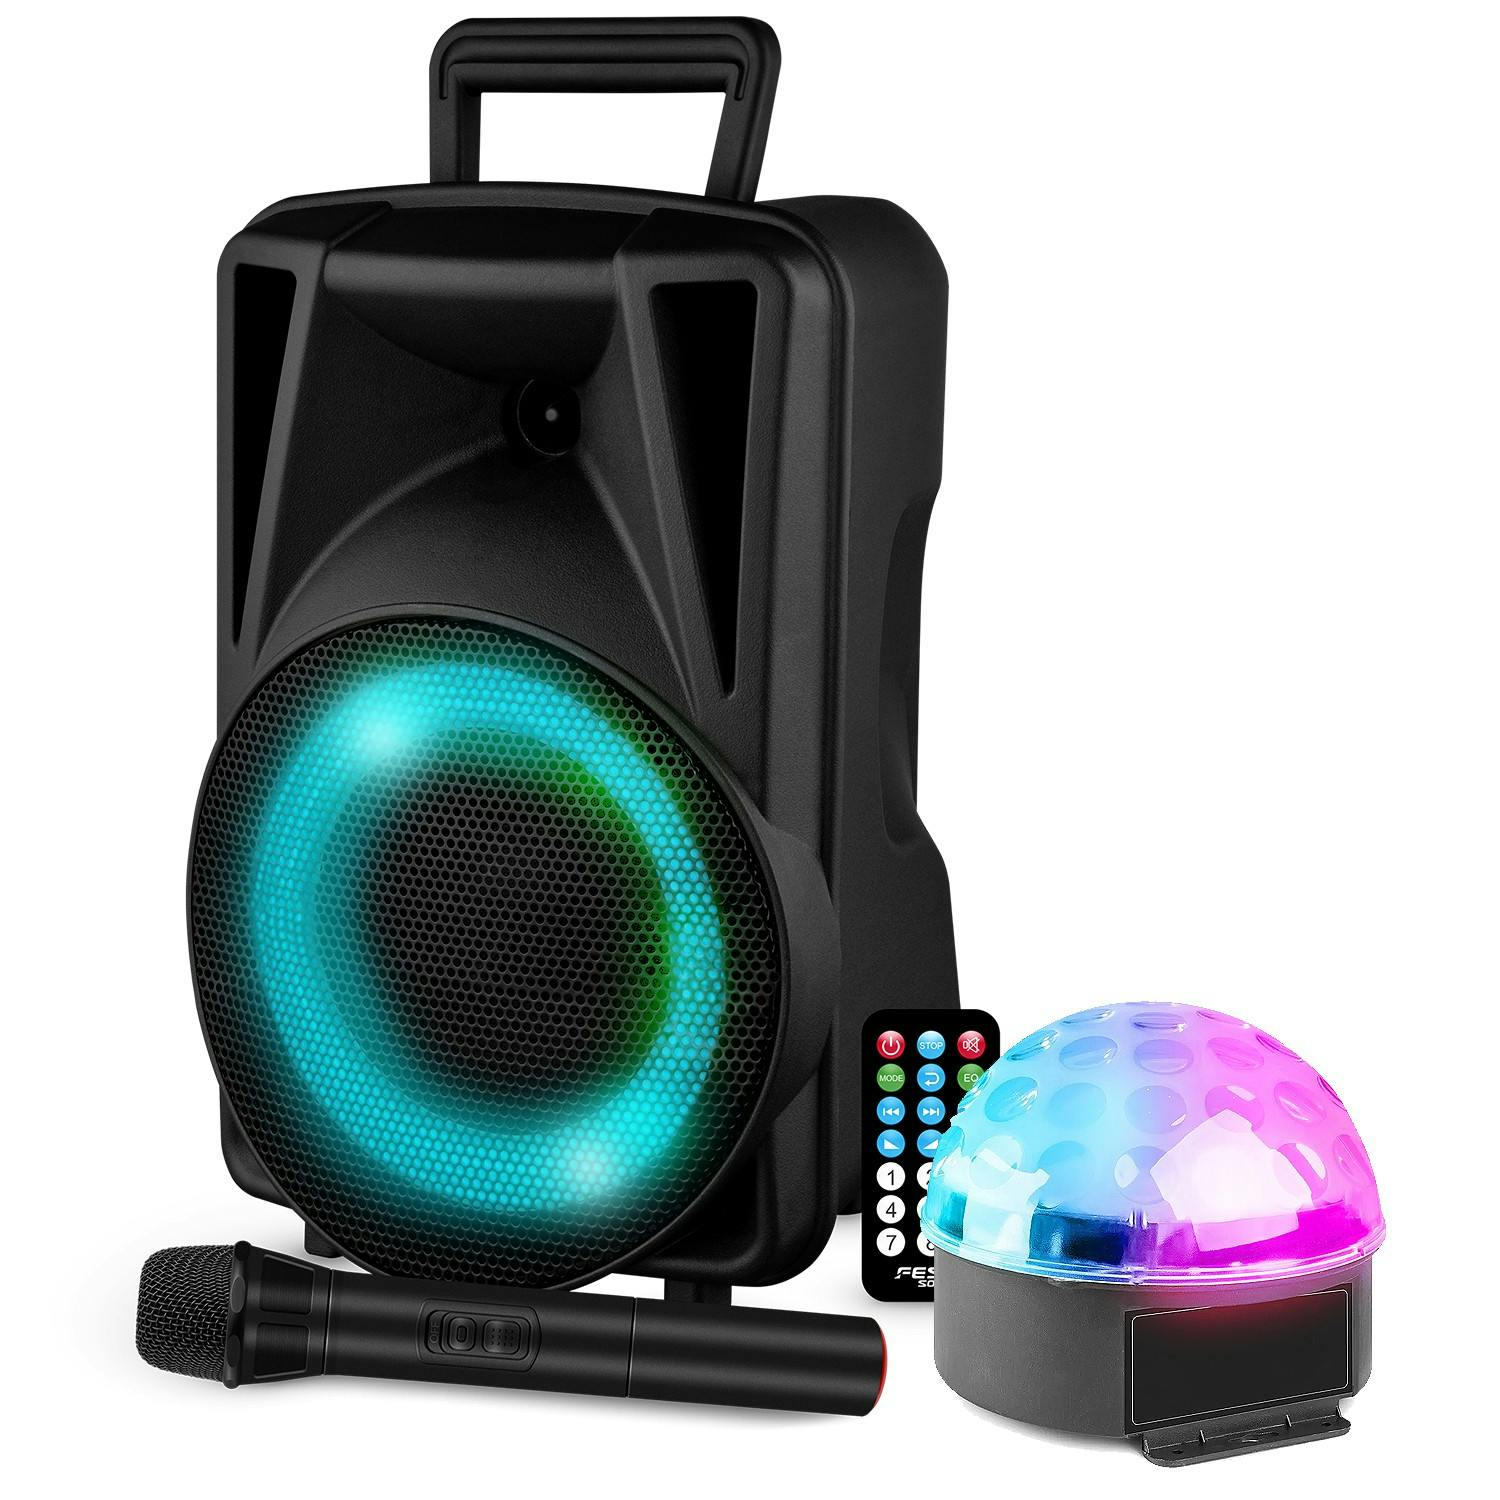 Enceinte karaoke sono dj koolstar autonome mobile sur batterie 8 - 200w -  usb-bluetooth-sd + micro + tel + ampoule diams-3led - Conforama